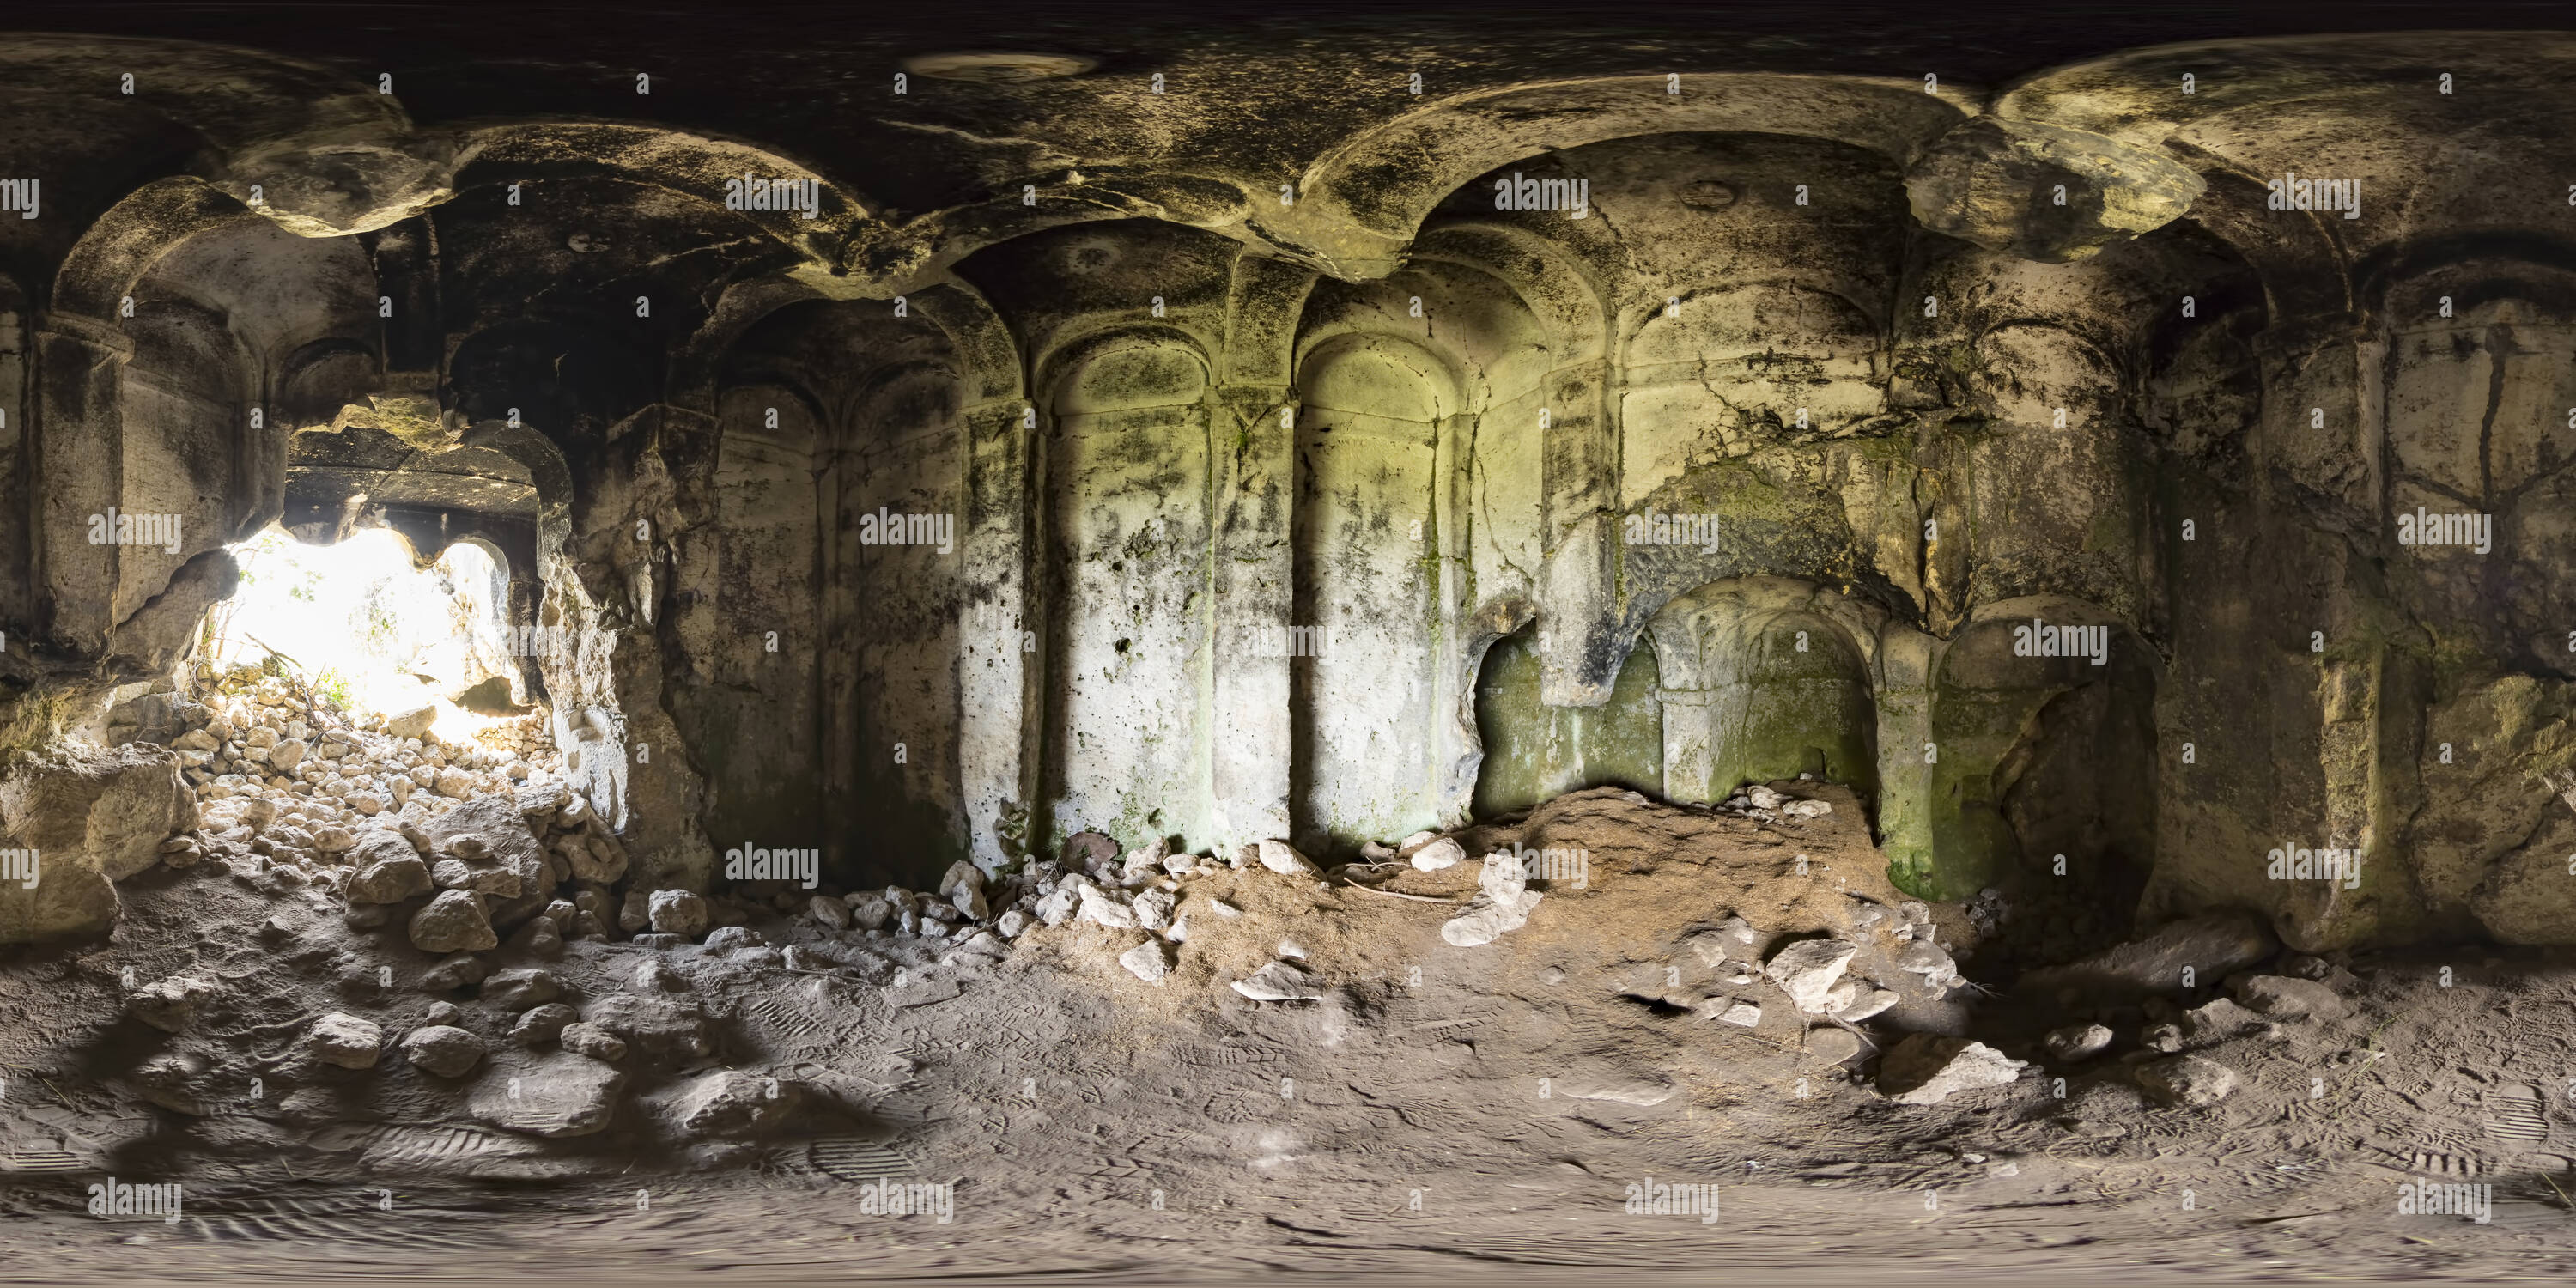 360 degree panoramic view of The Cave Church Of Elmakuzu Bozyazi Vr Mersin 2e2